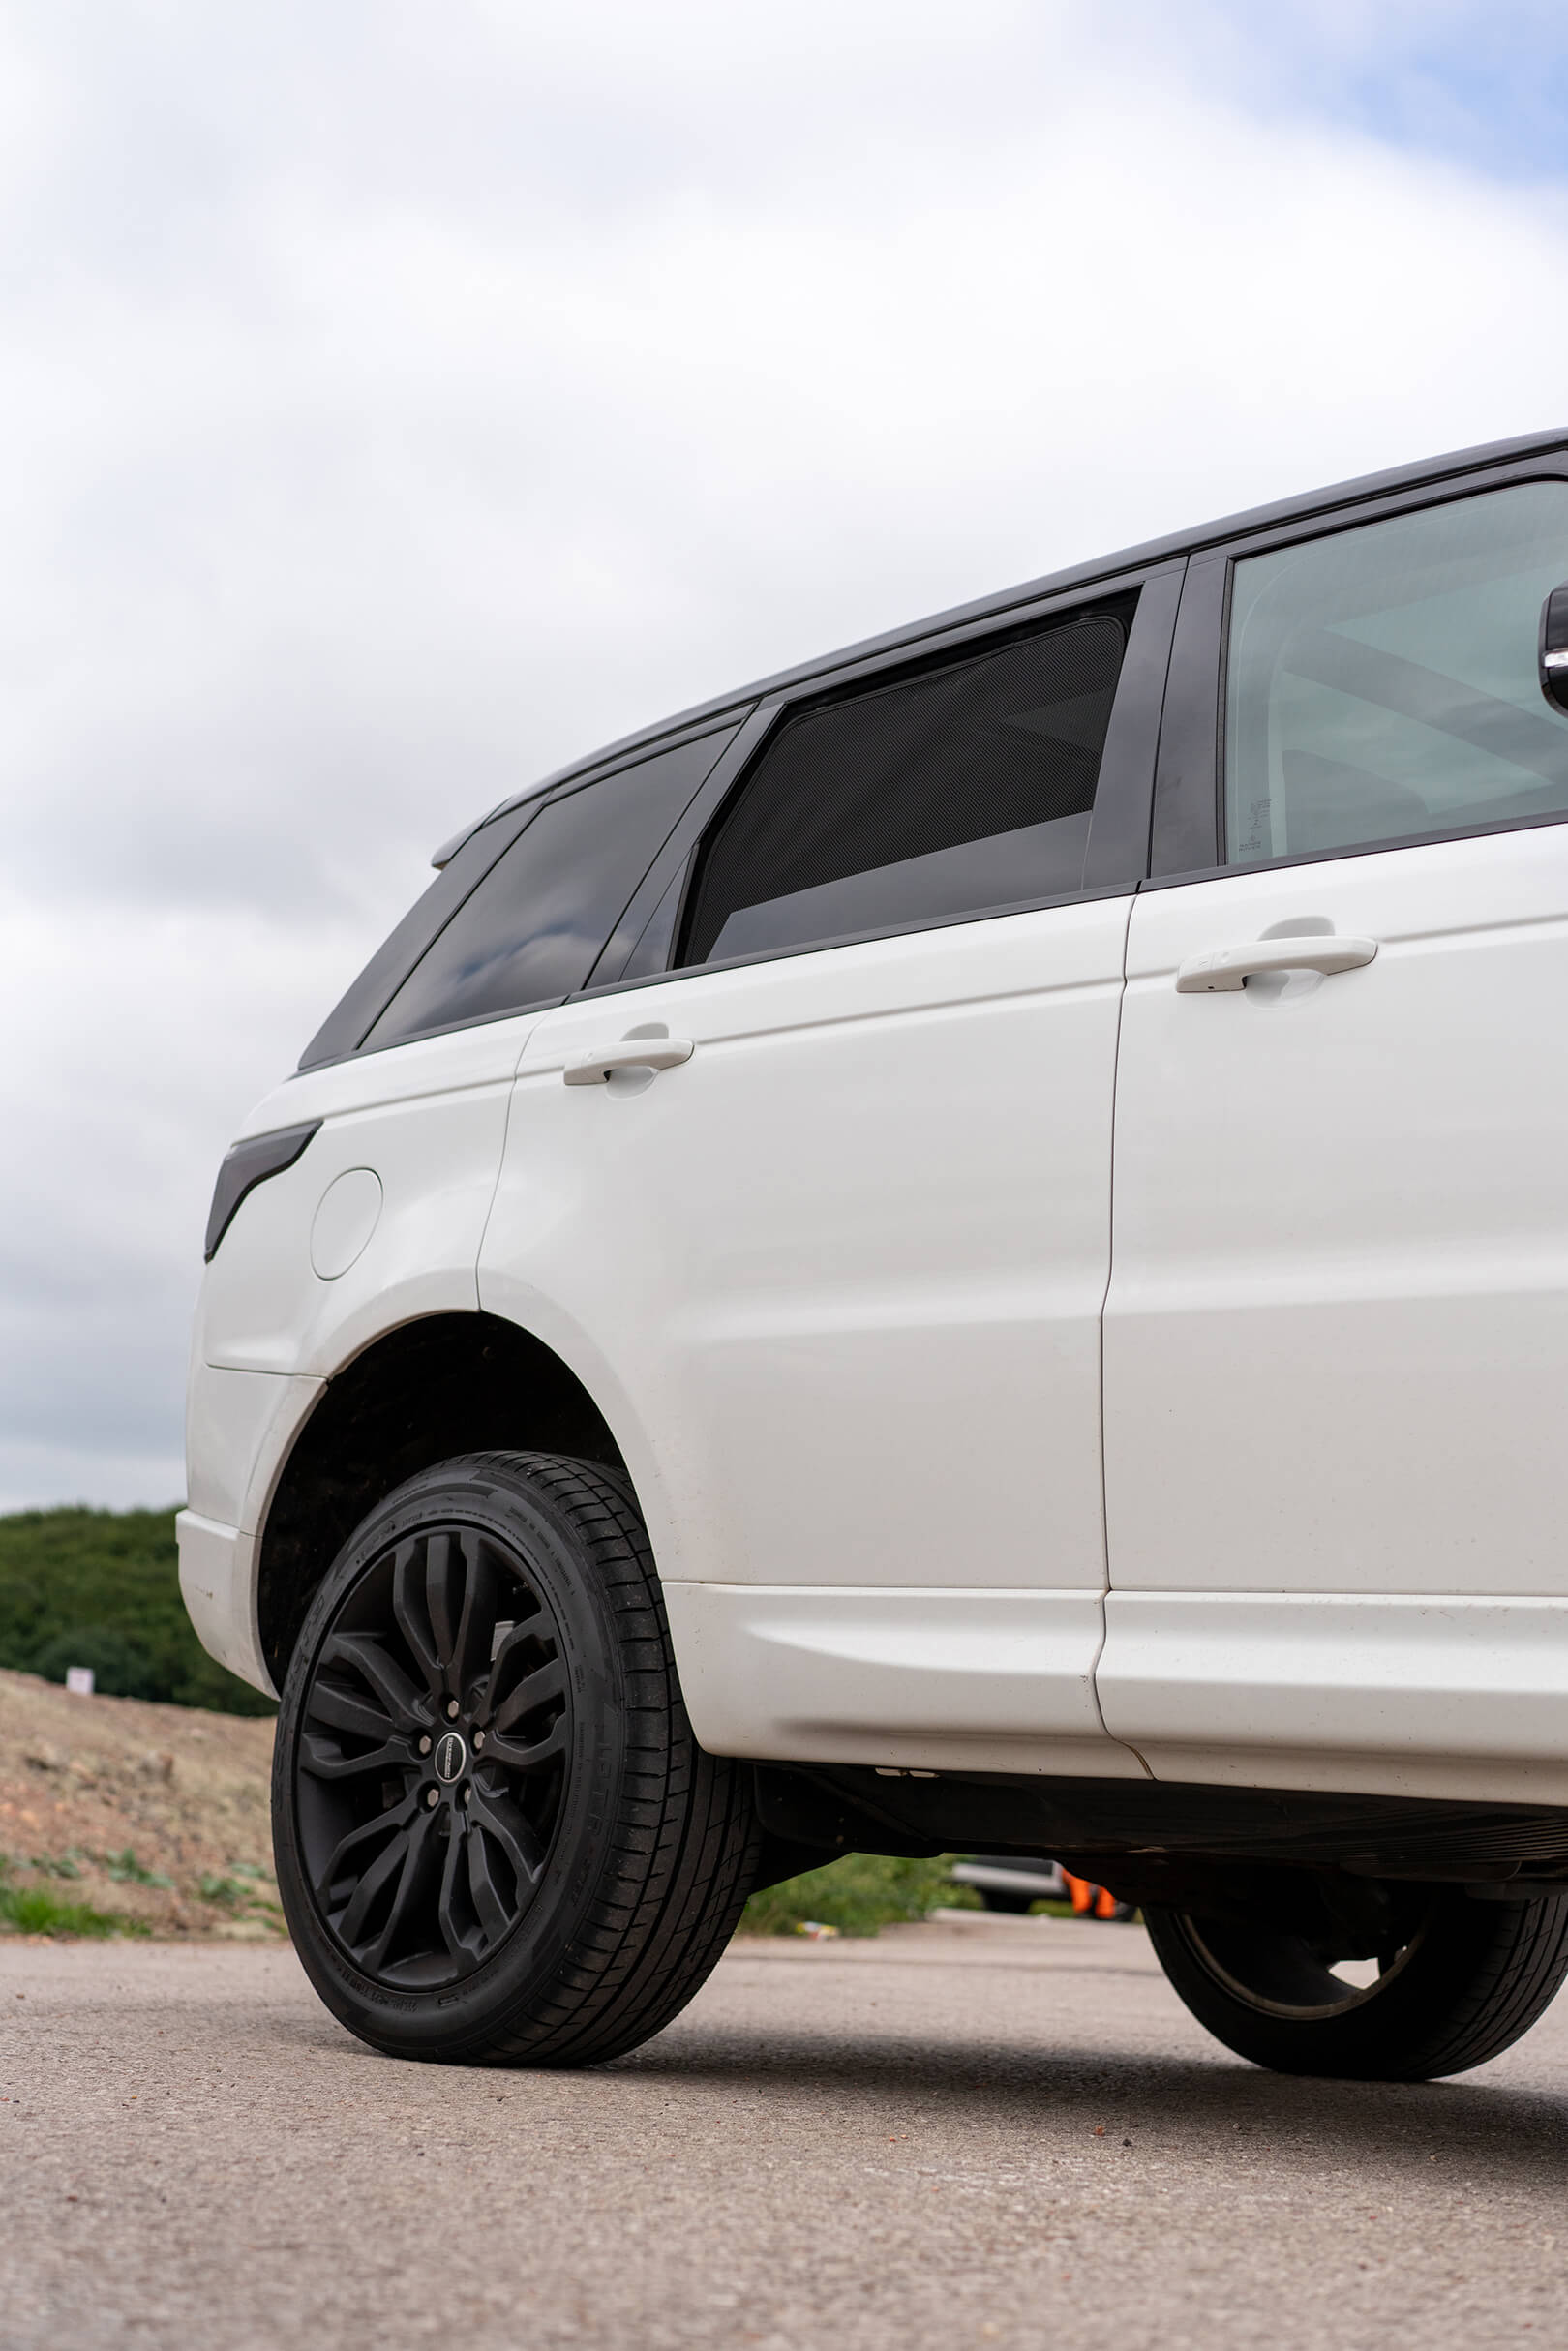 parasoles Land Rover Range Rover Sport 5 puertas 13>-PARASOLES-ICCTUNING